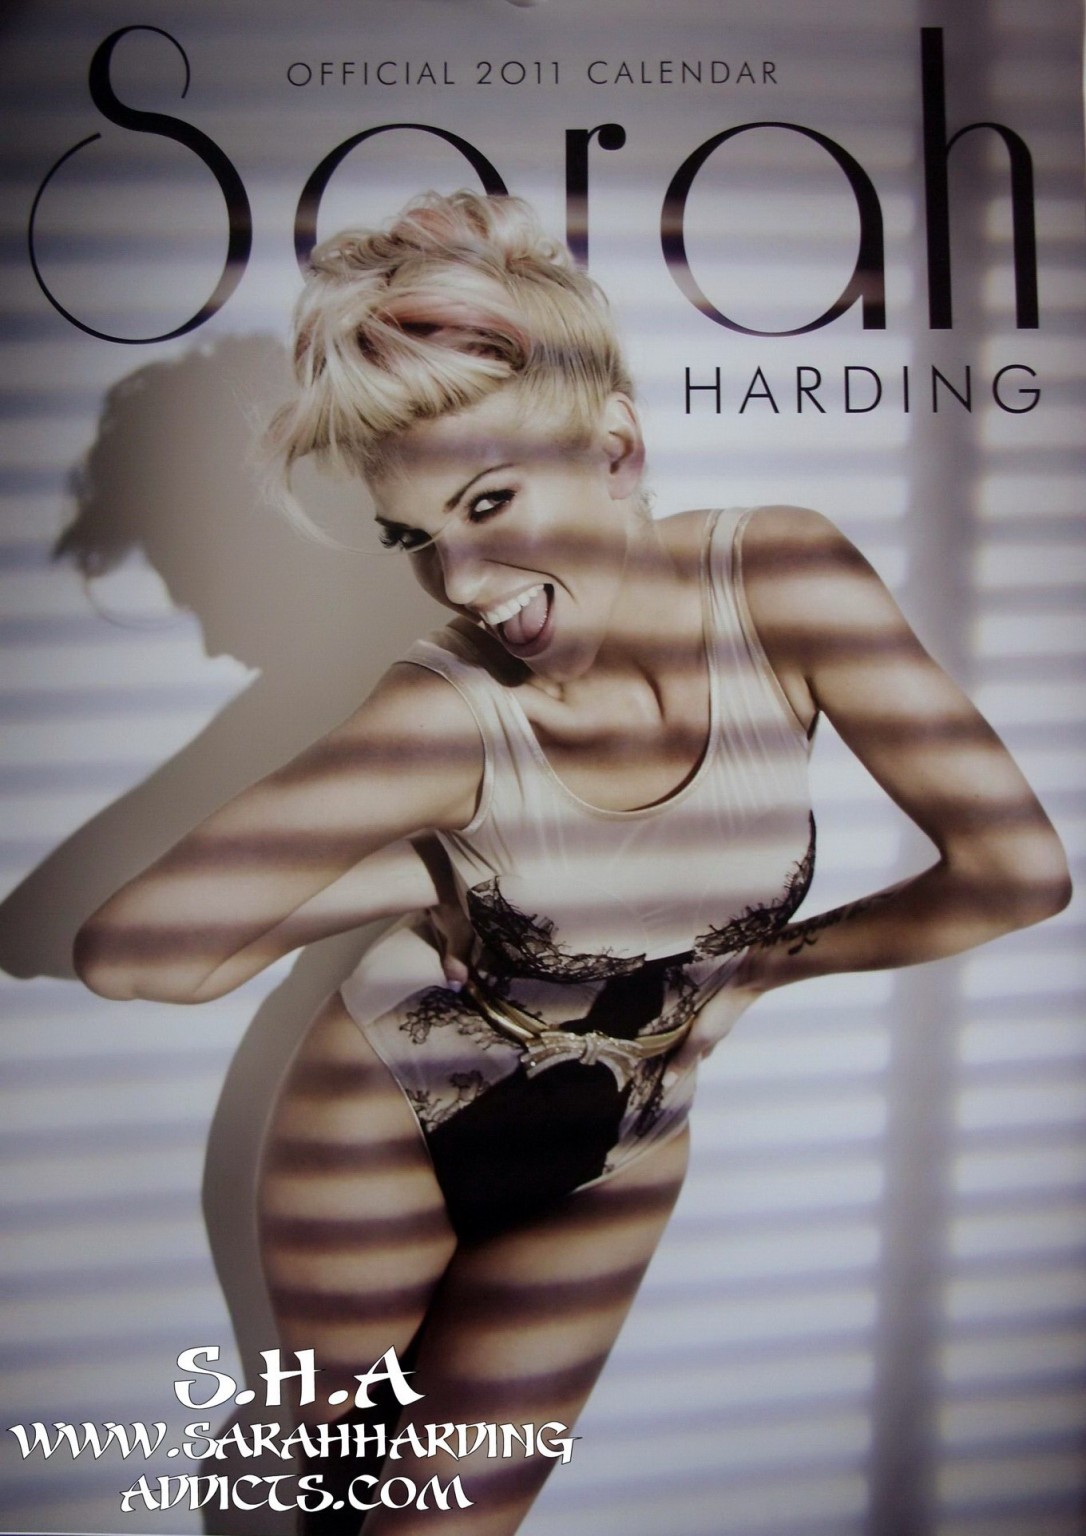 Sarah Harding nude  wearing lingerie for her official 2011 calendar #75332438